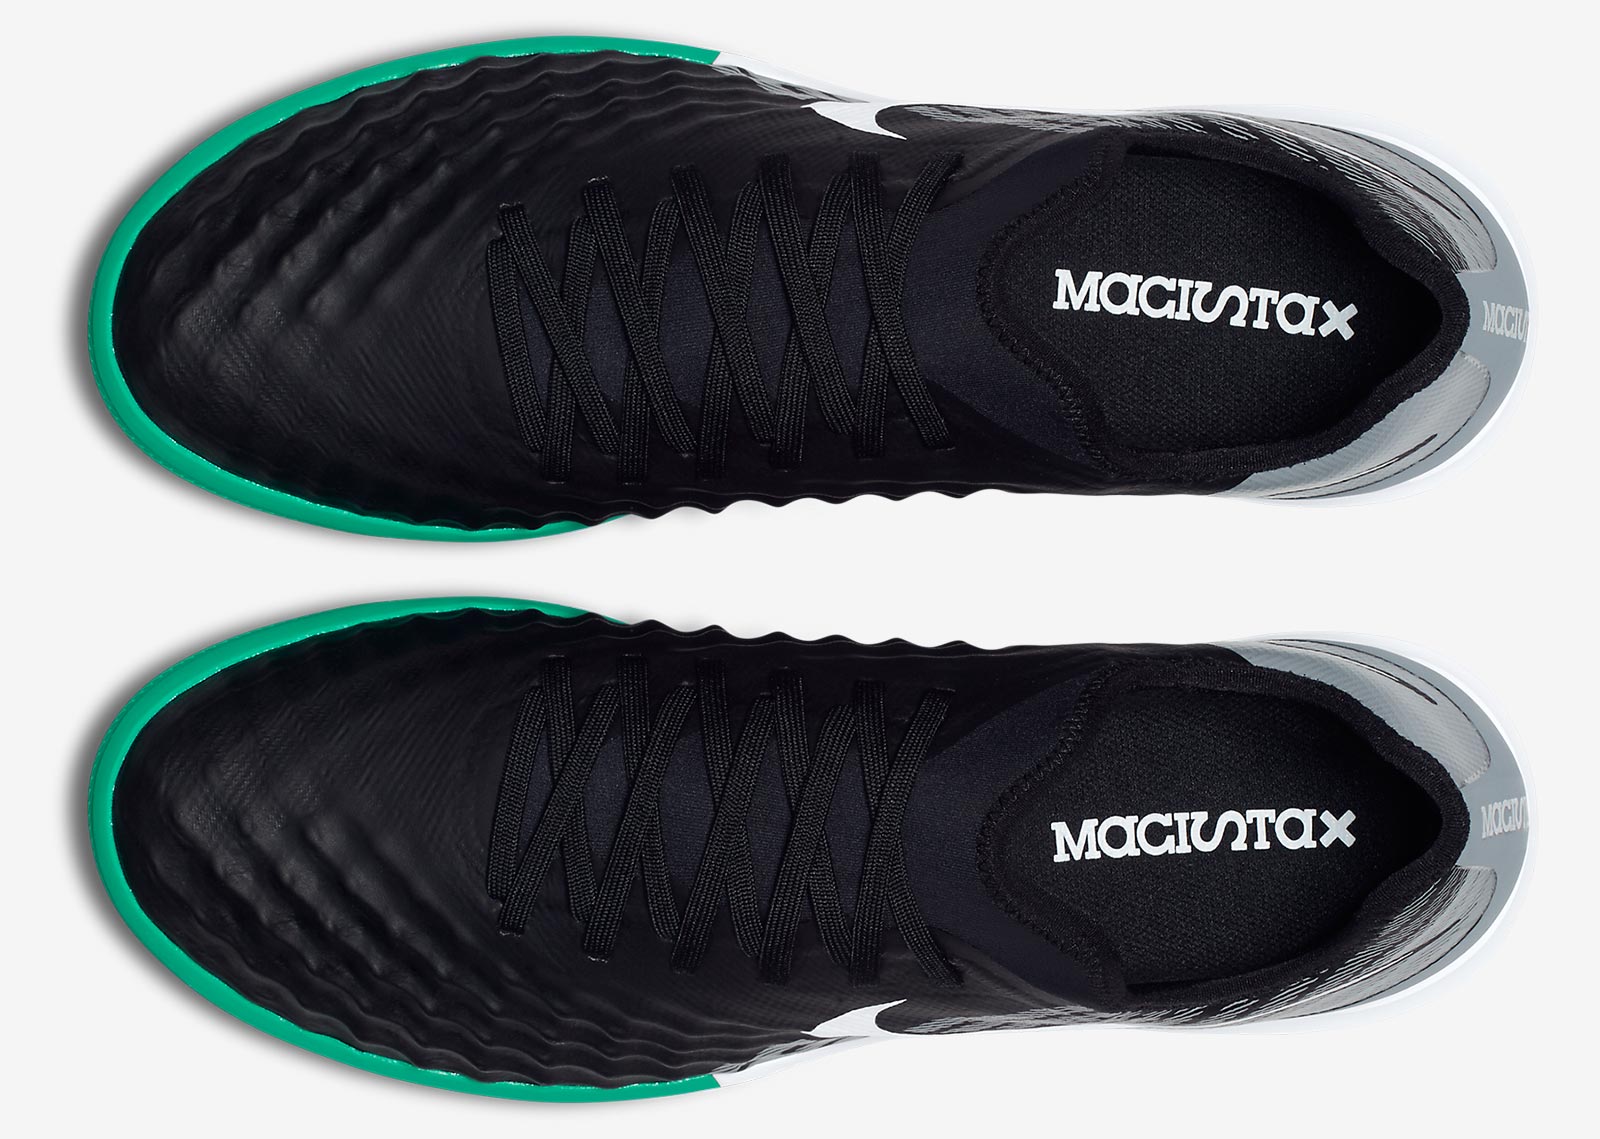 Nike MagistaX II Pitch Dark Released - Footy Headlines